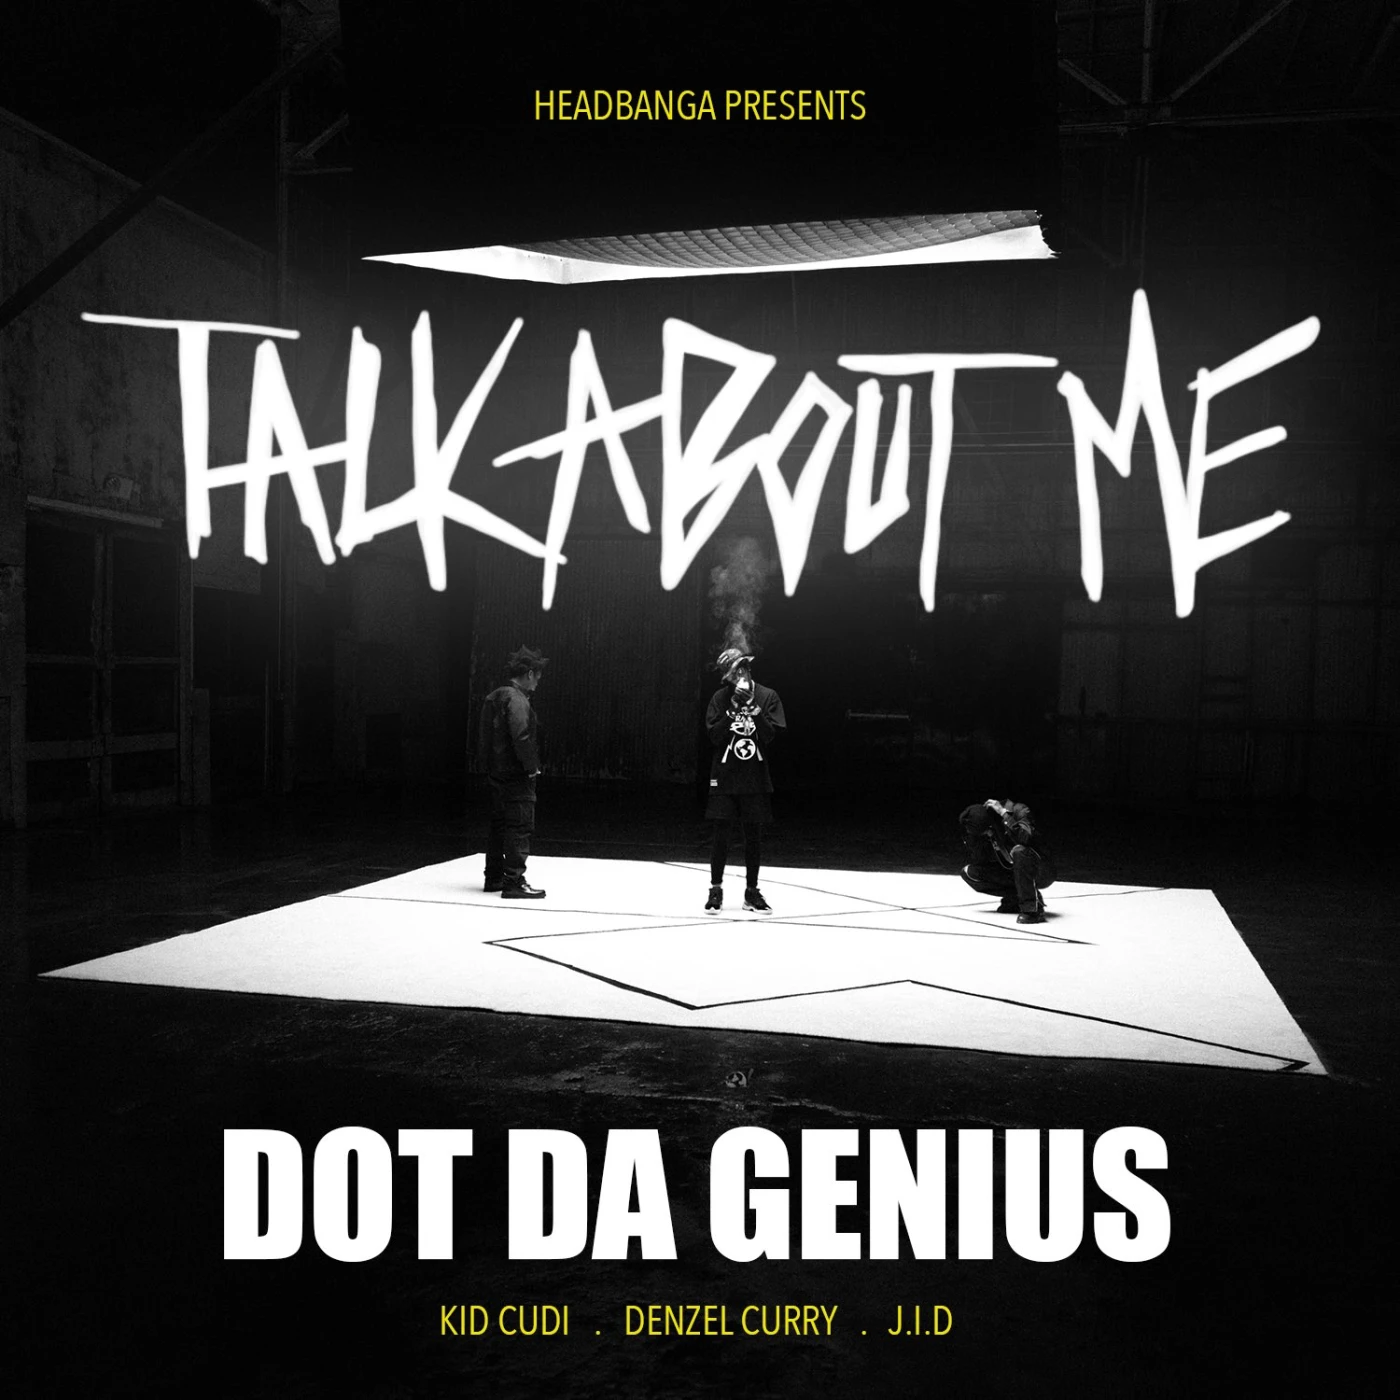 Dot Da Genius featuring Kid Cudi, Denzel Curry, & JID — Talk About Me cover artwork